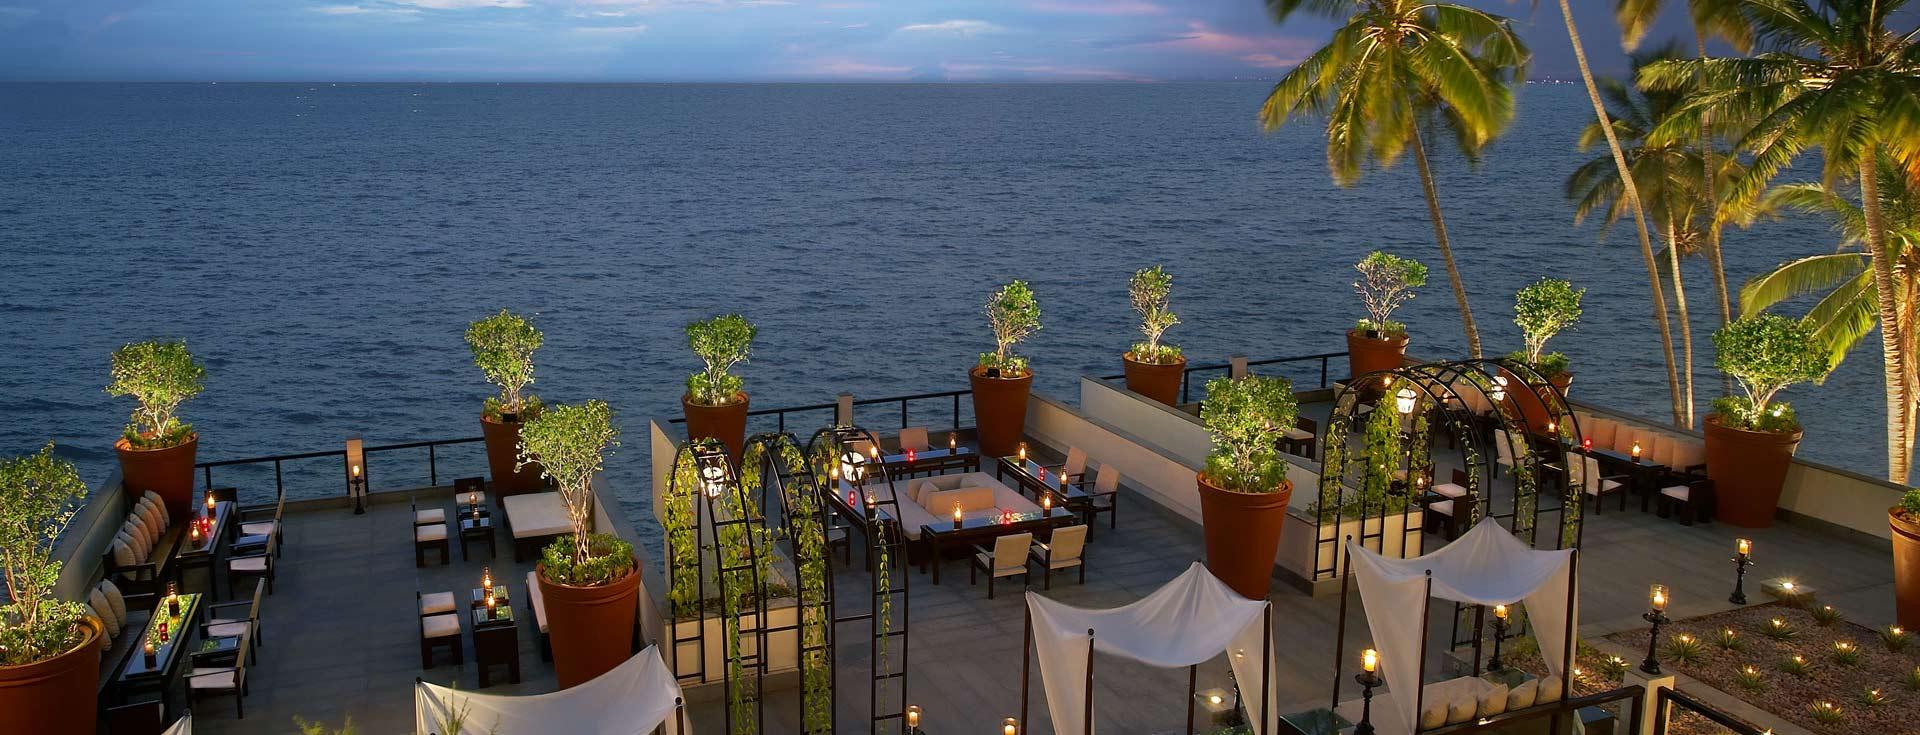 The Sky Bar - stunning view of the Kovalam coastline